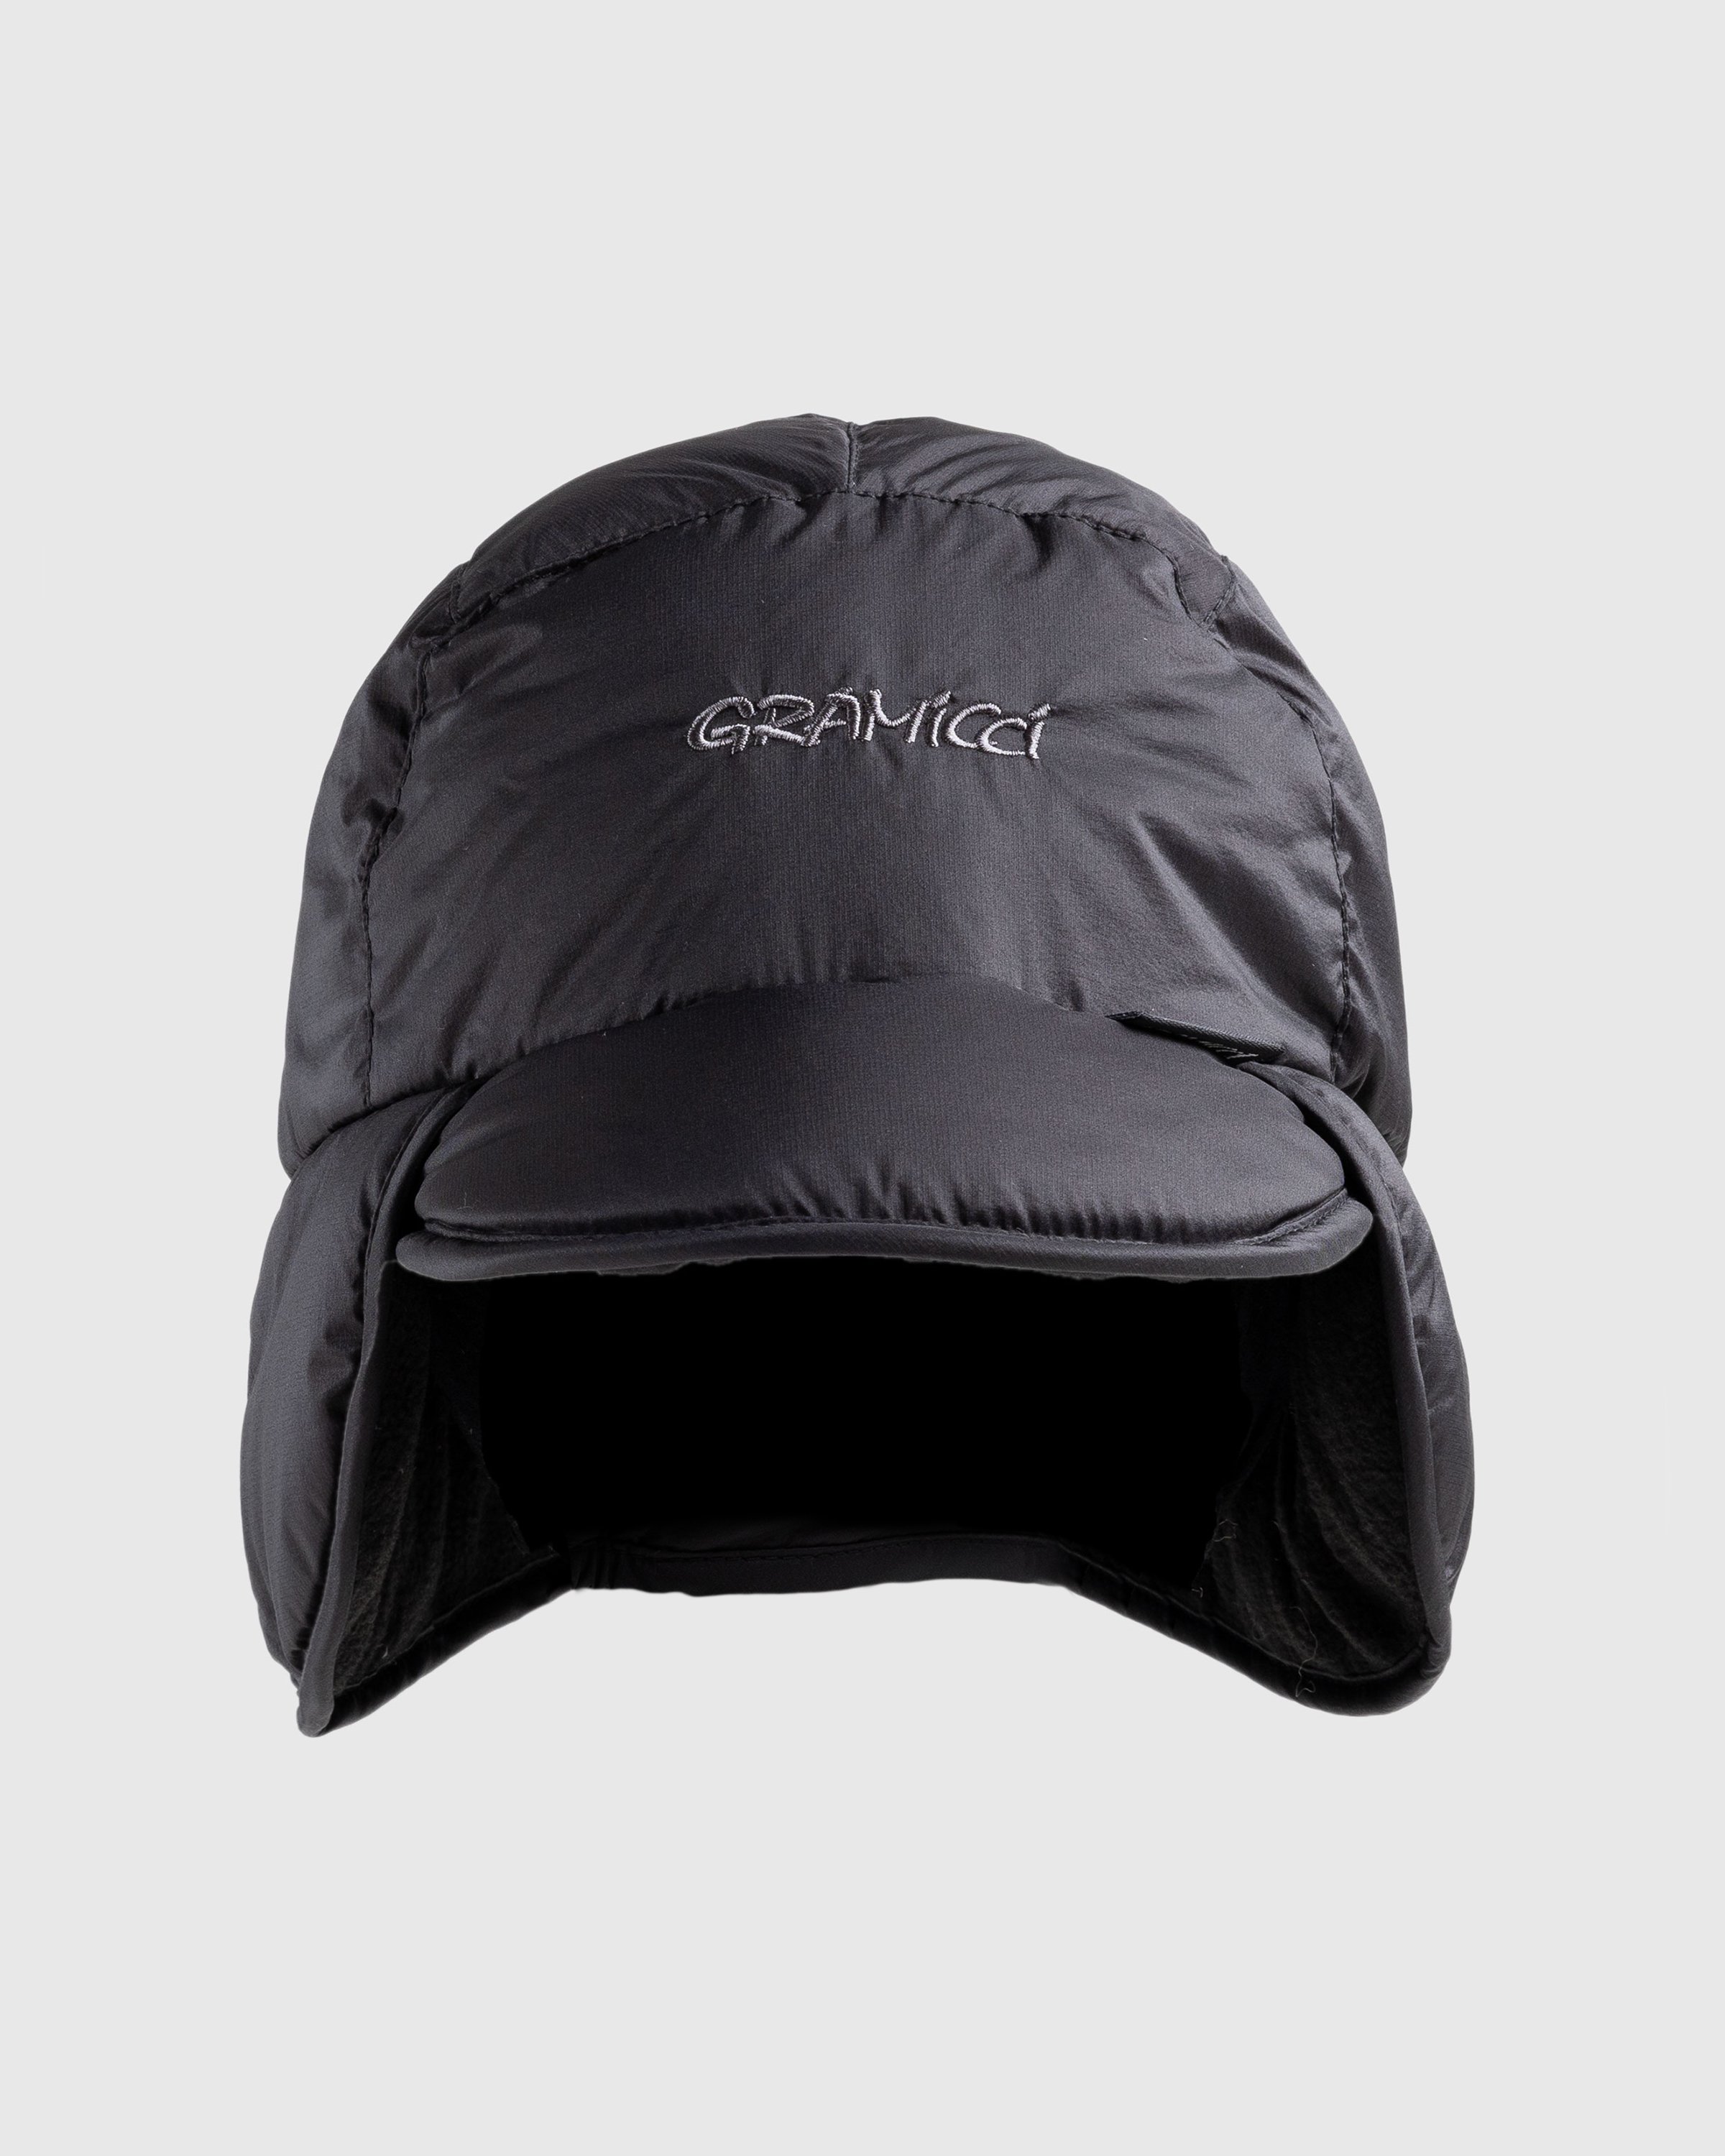 Gramicci - DOWN MOUNTAIN CAP - Accessories - Black - Image 1